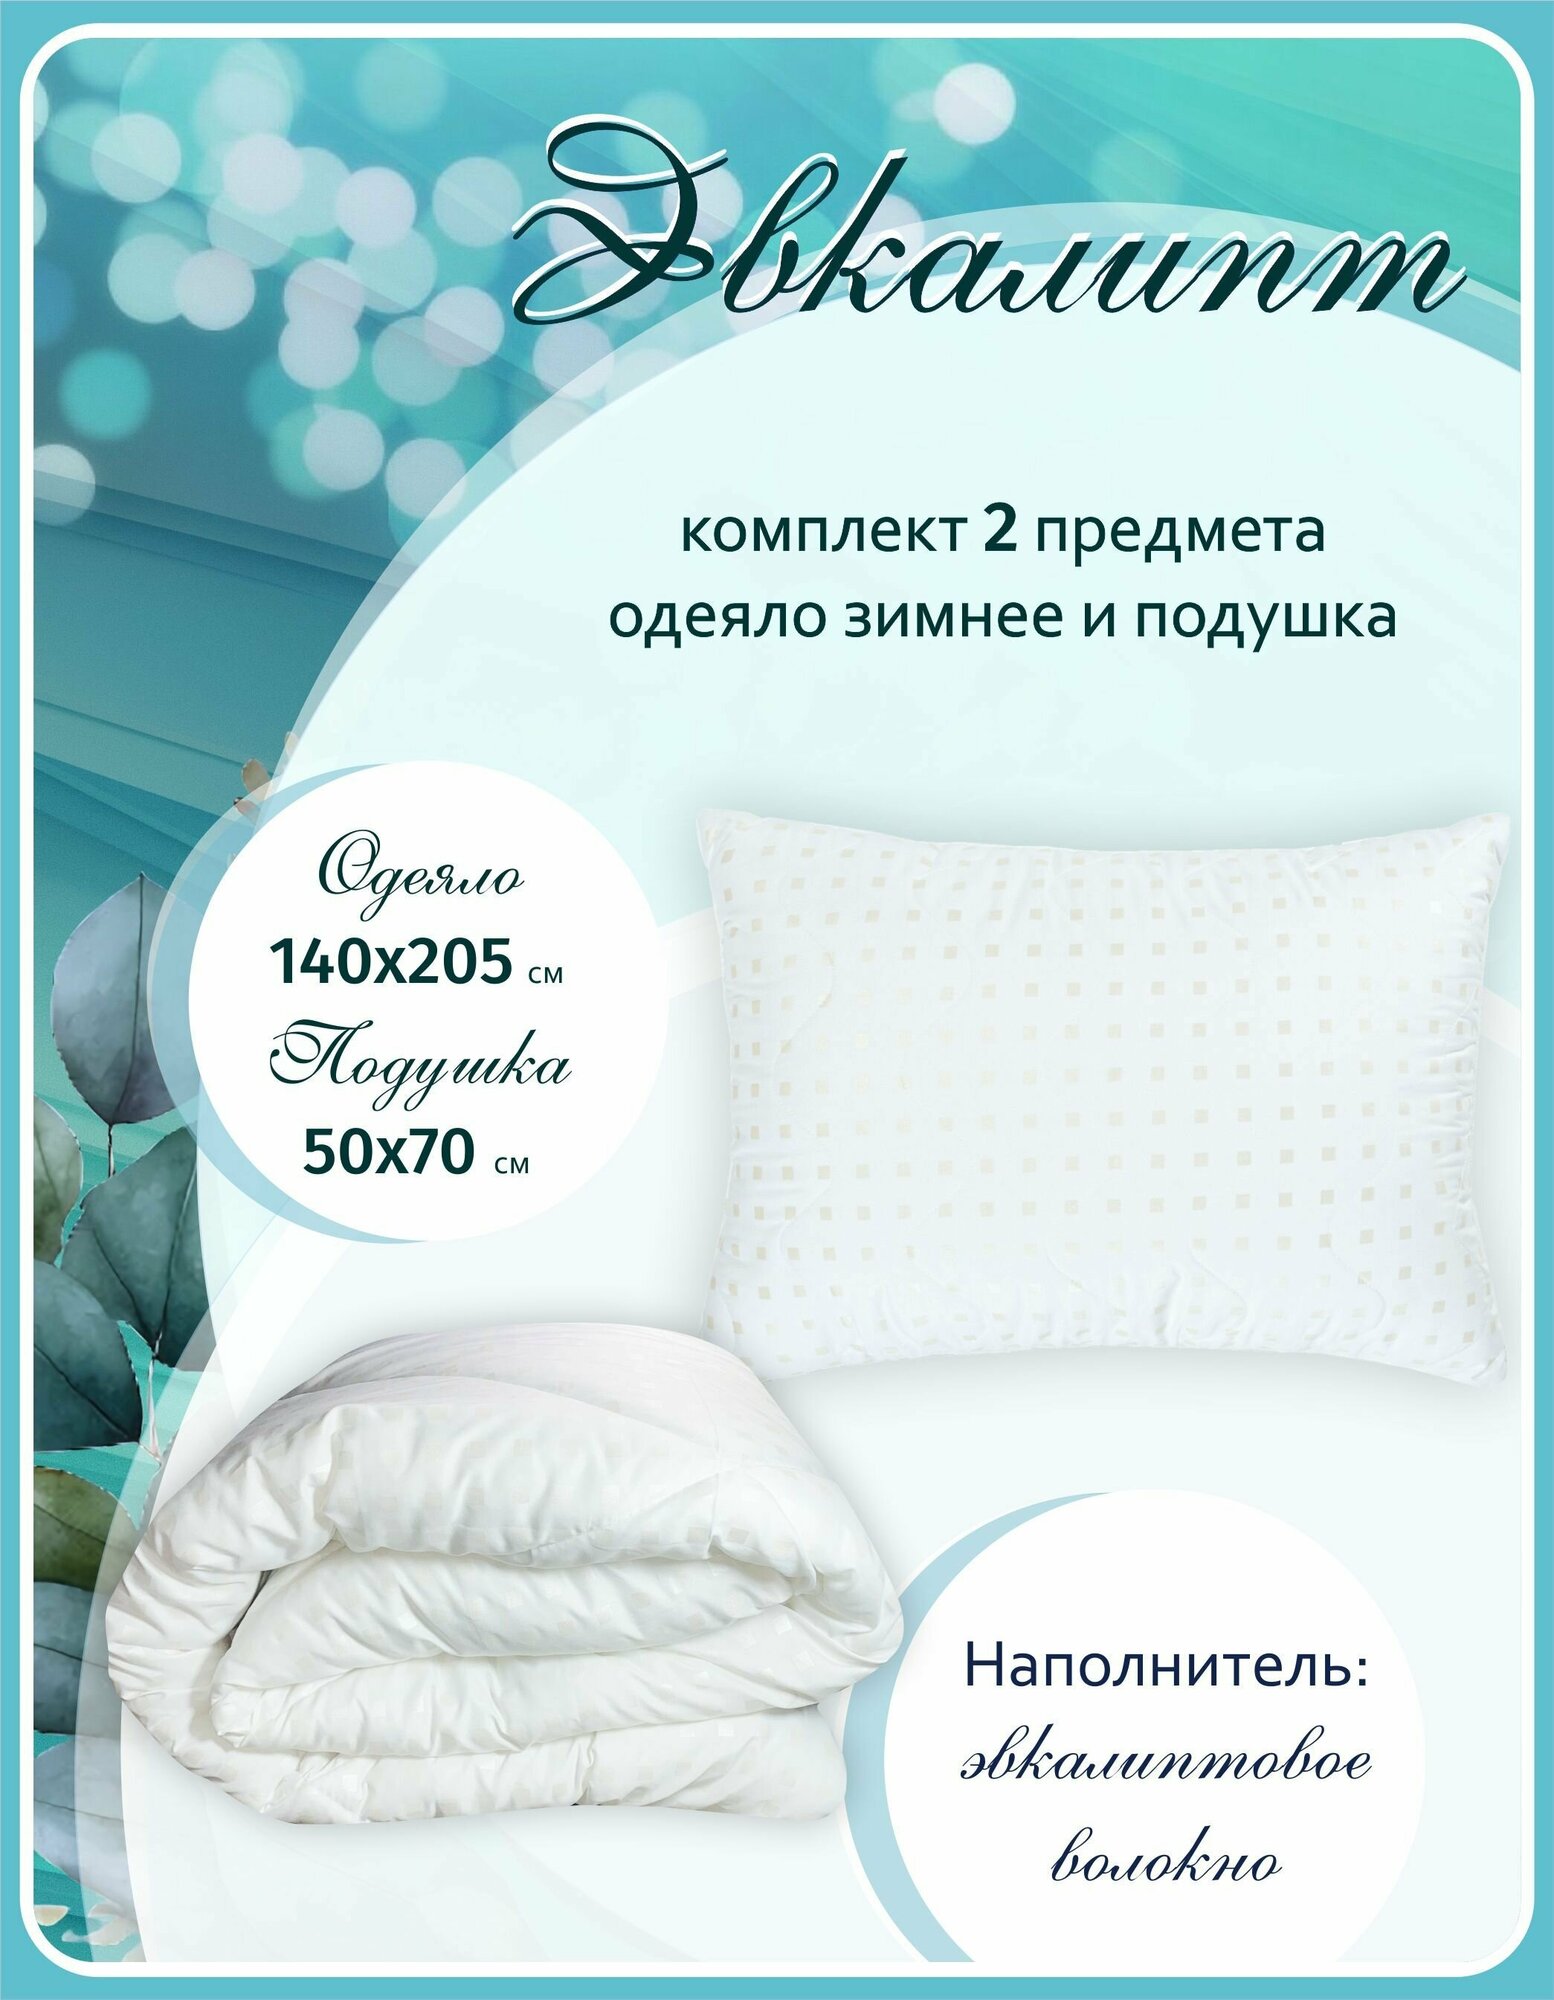 Одеяло 1.5 легкое и подушка 50х70 комплект Эвкалипт